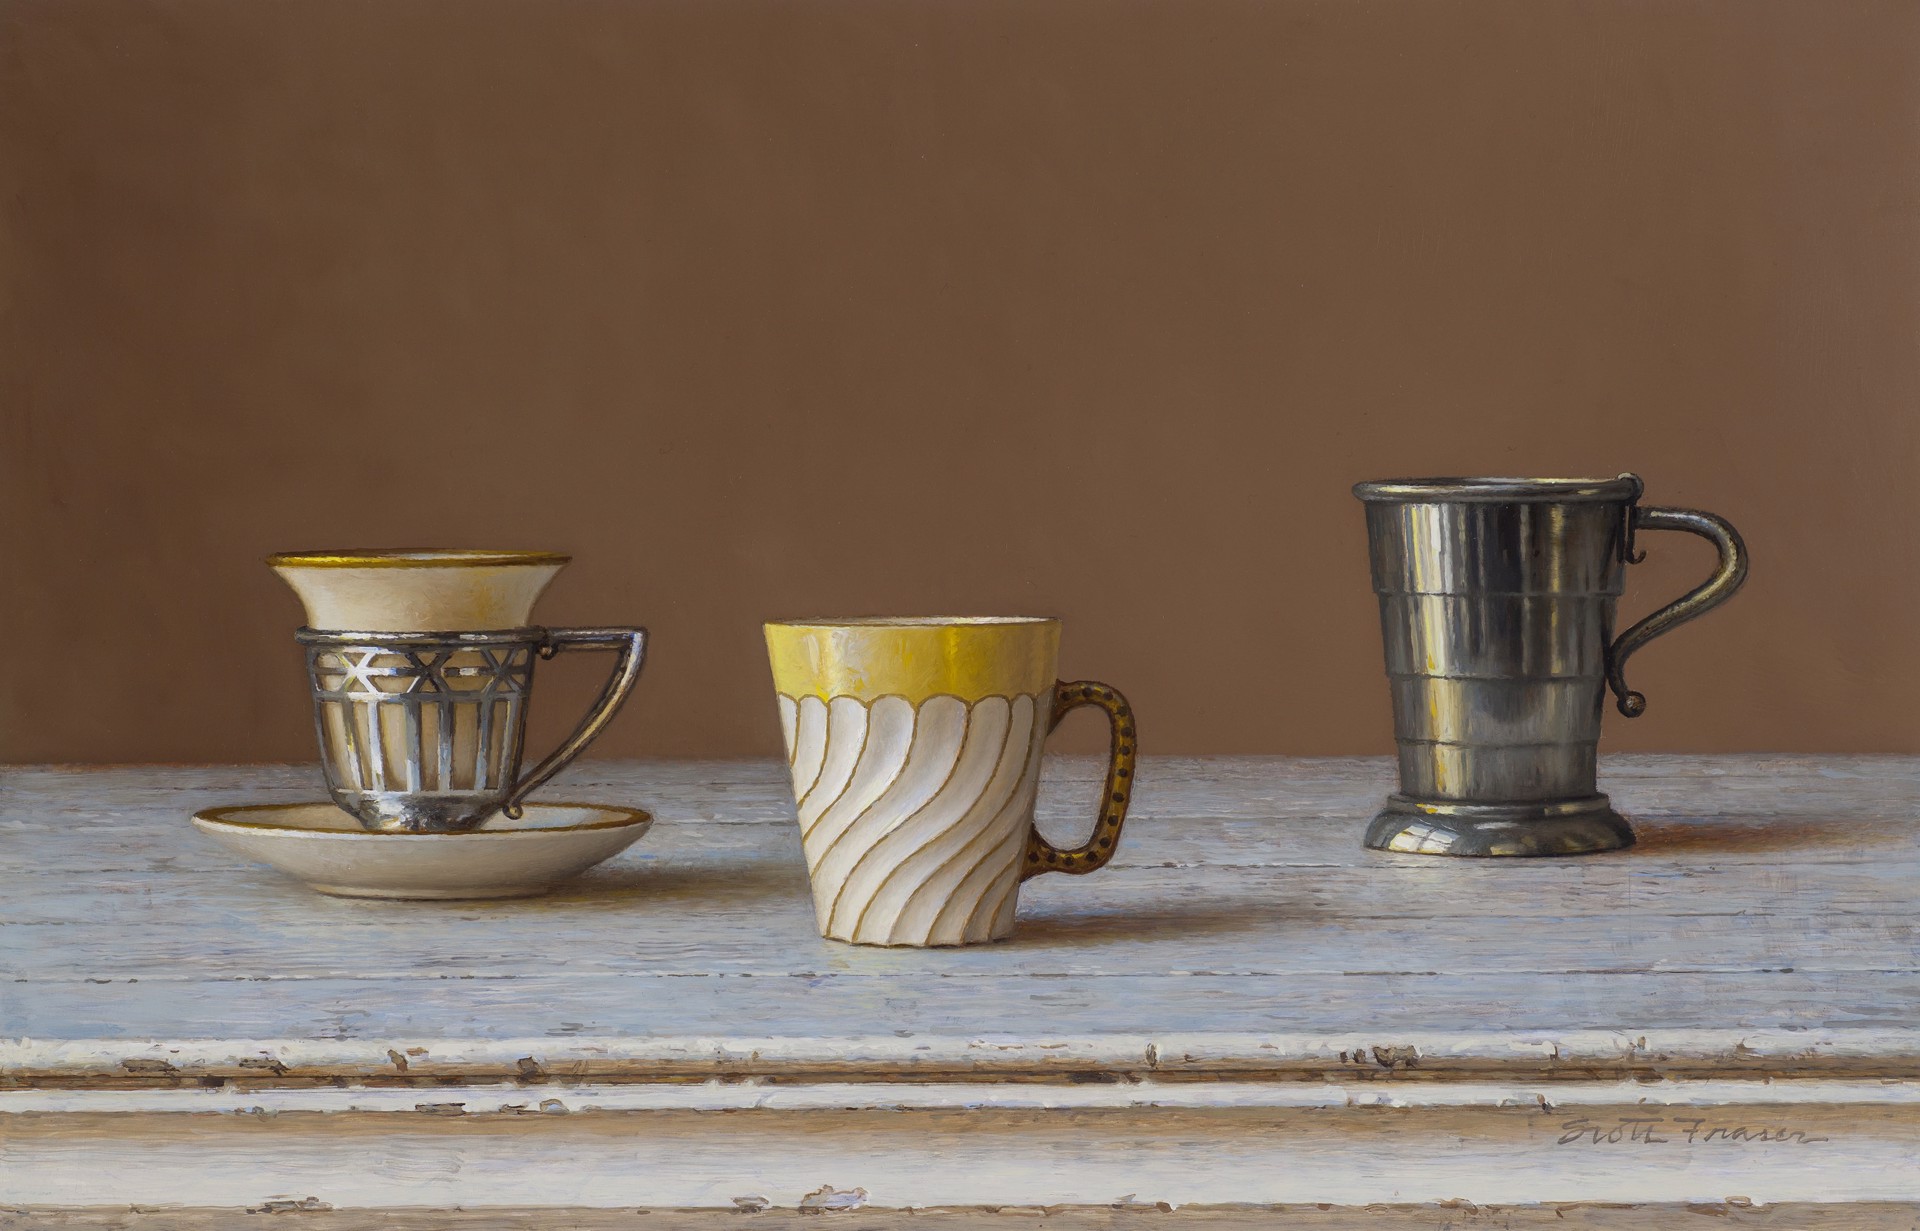 Three Cups by Scott Fraser